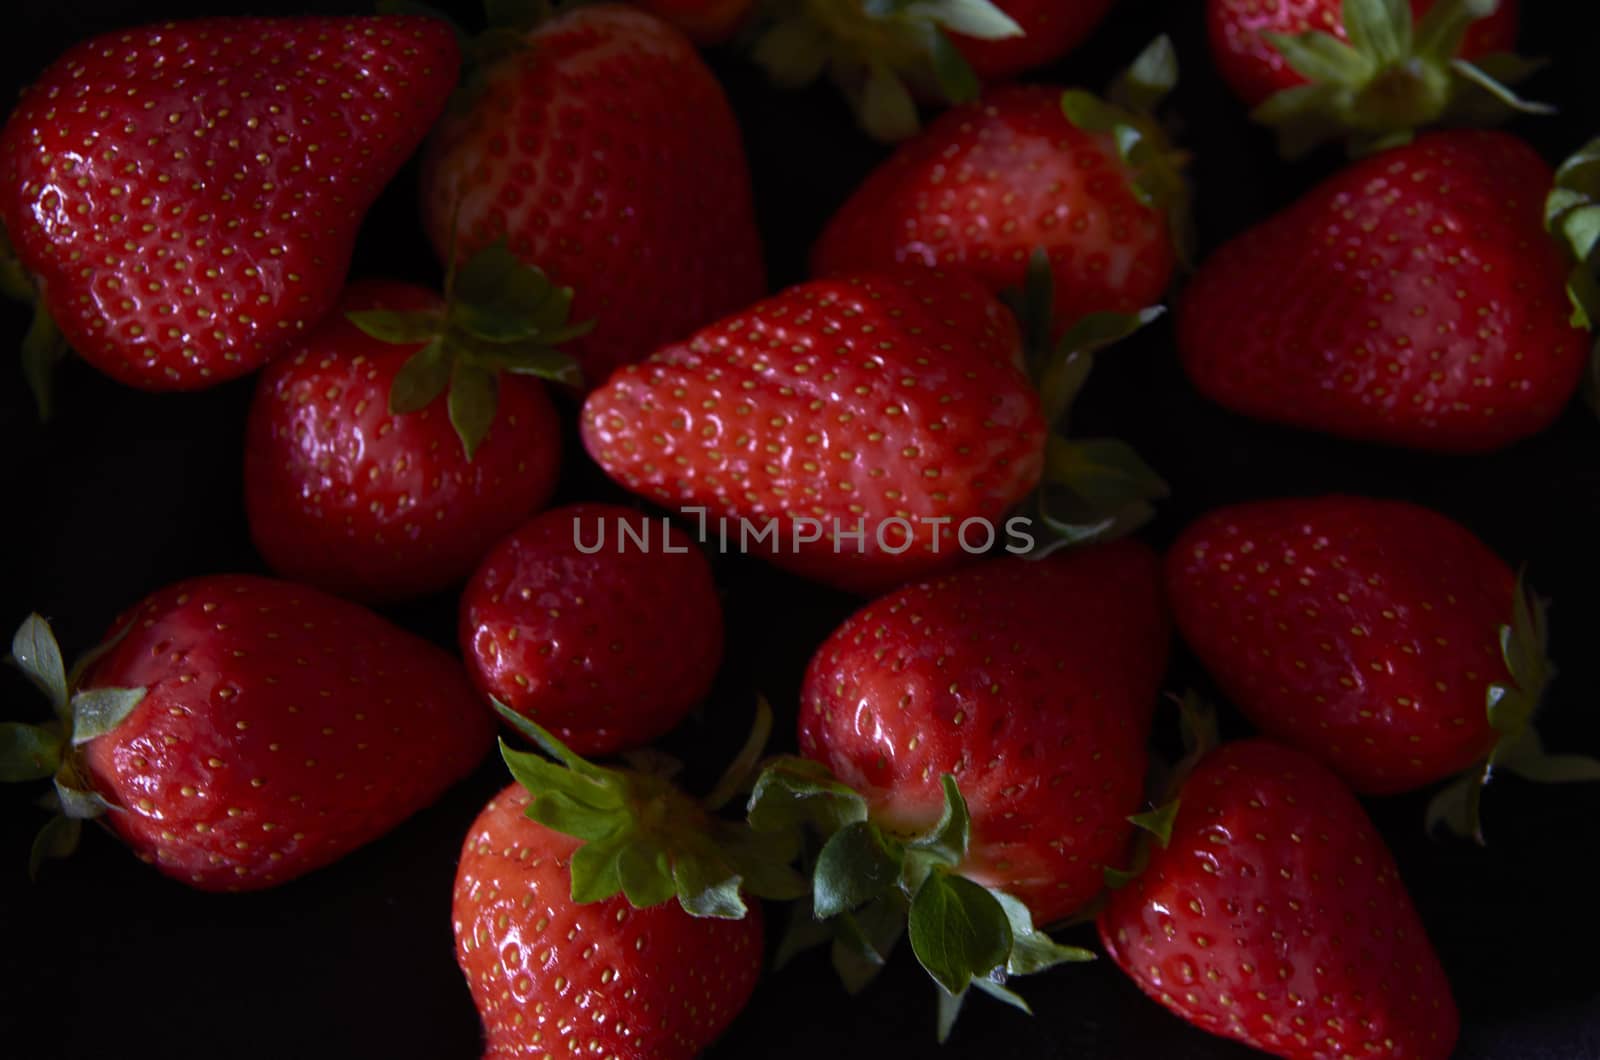 Strawberries on black background, long exposure natural light